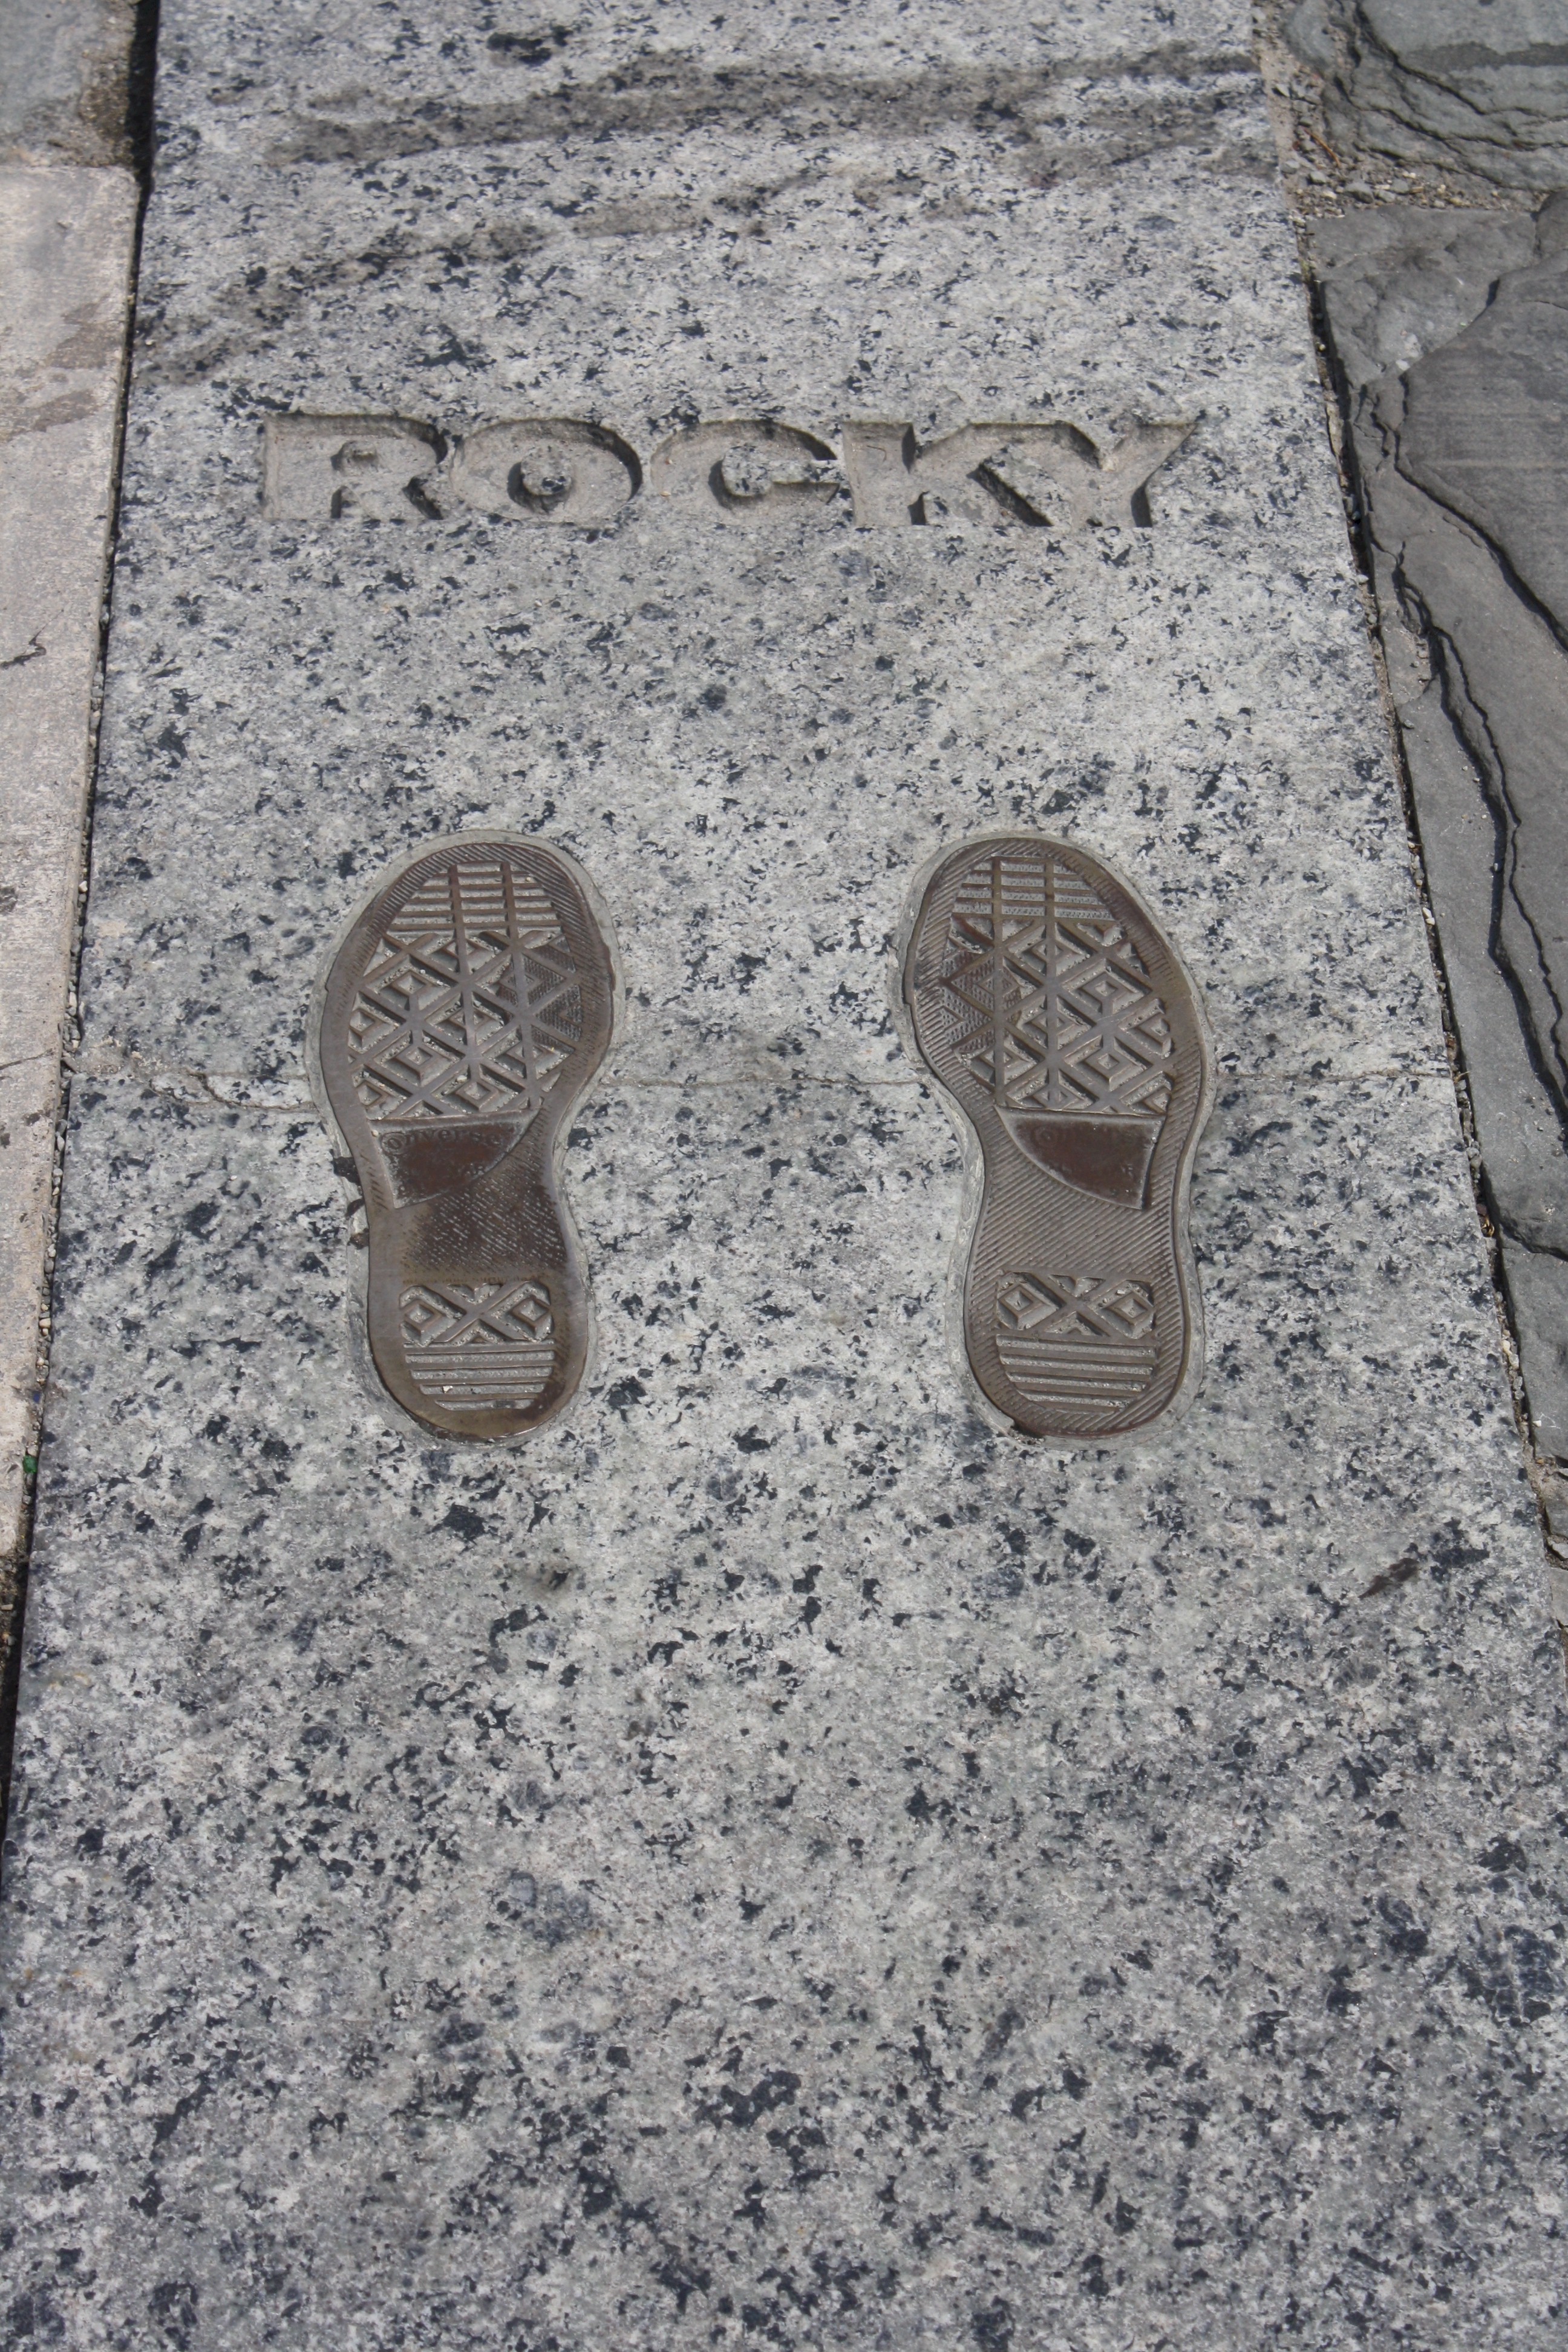 The Footprints of Rocky Balboa